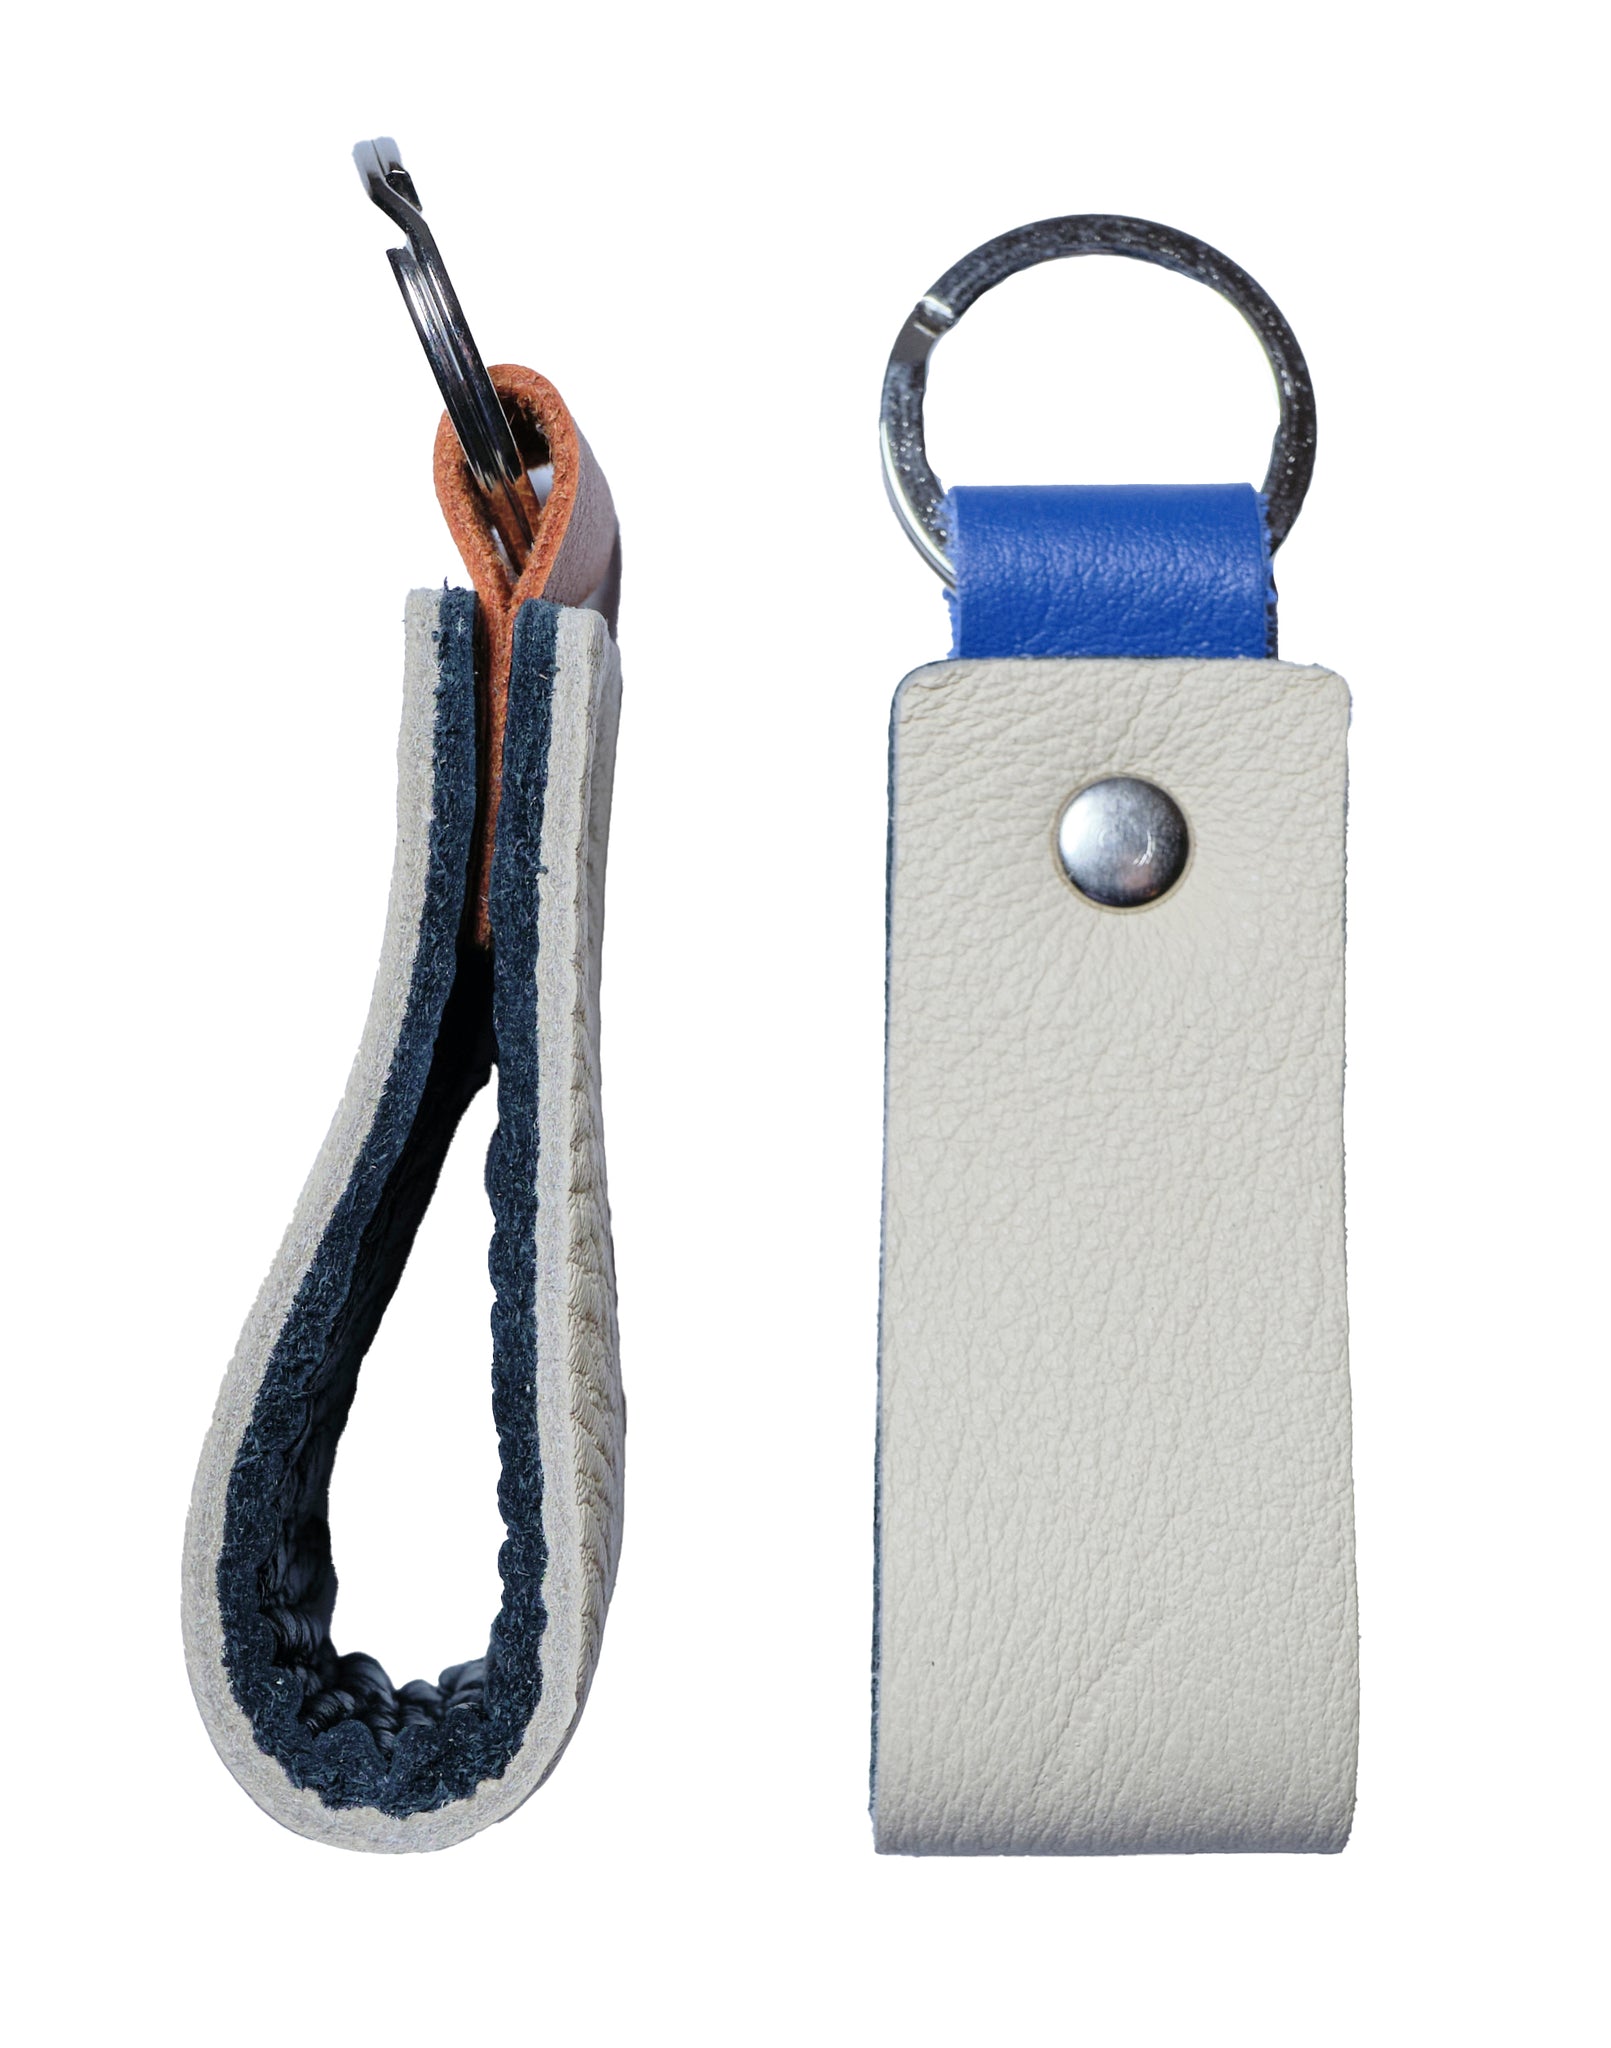 Leather Keychain for Men and Women - Key Holder - Key Organizer 